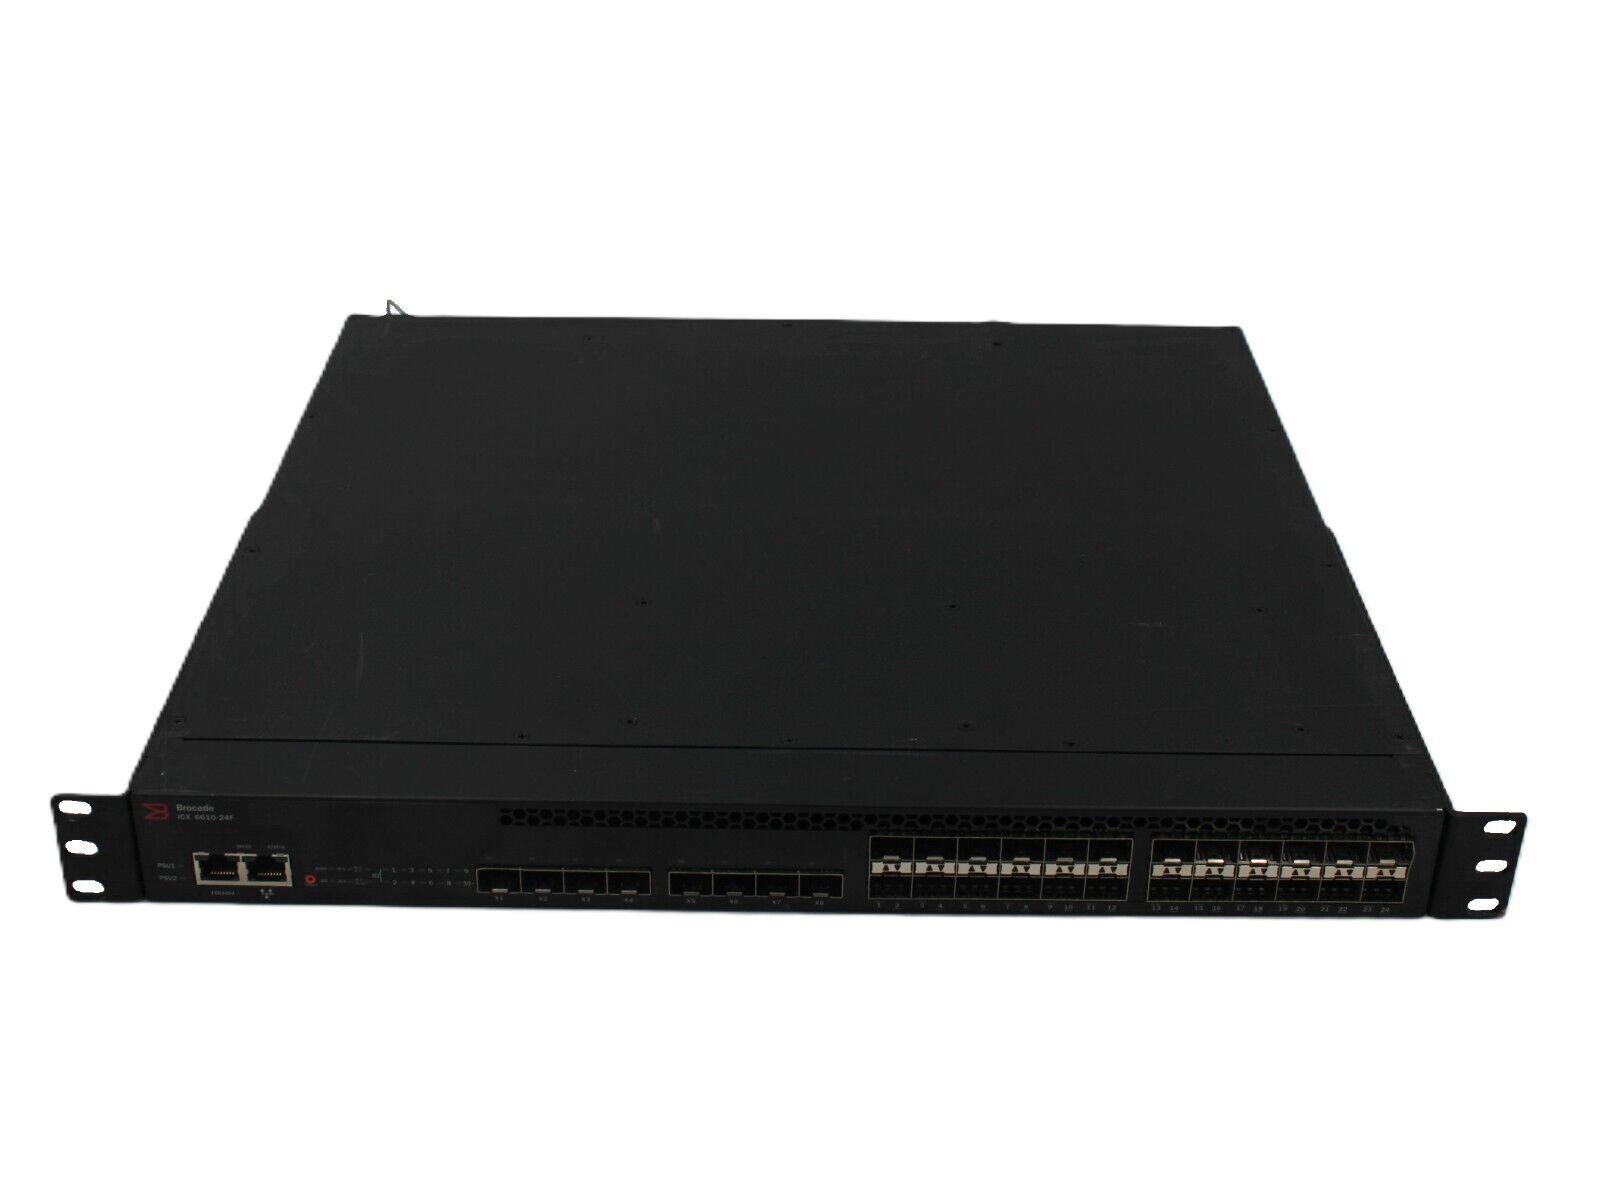 BROCADE ICX6610-24F-E 24-port 1 GbE SFP Switch